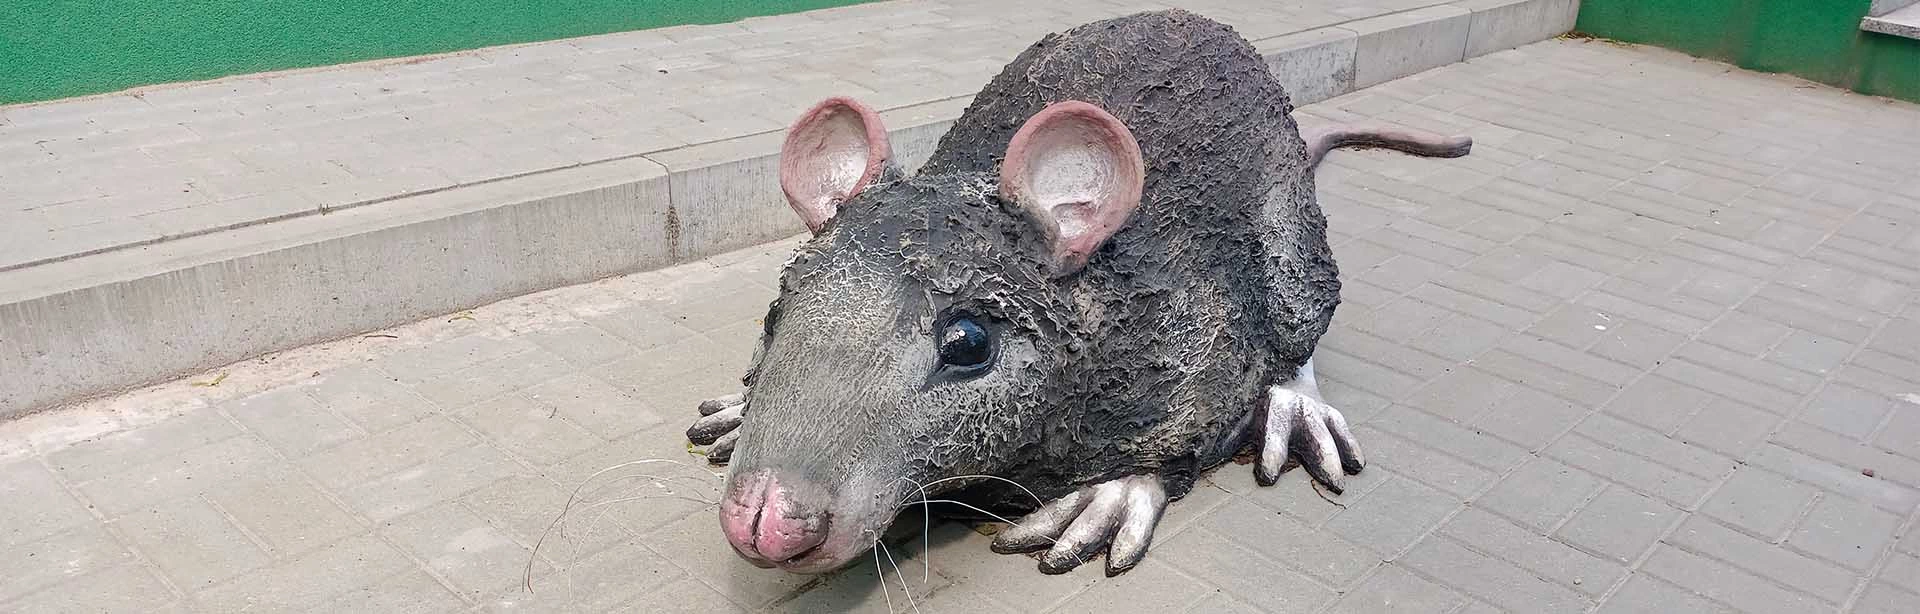 Figurka szczura